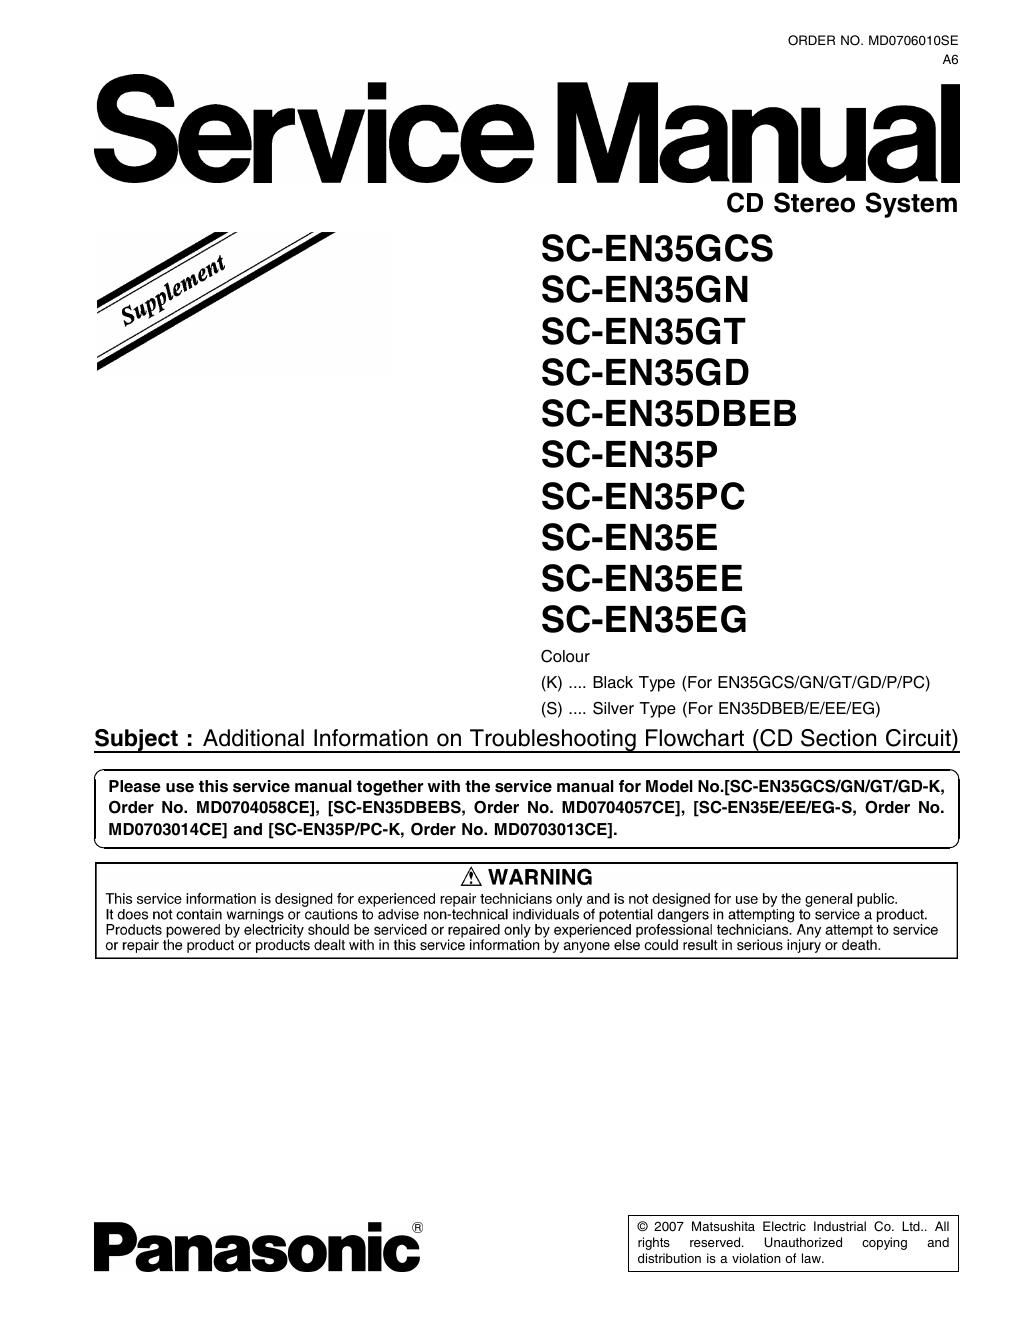 panasonic sc en 35 dbeb service manual